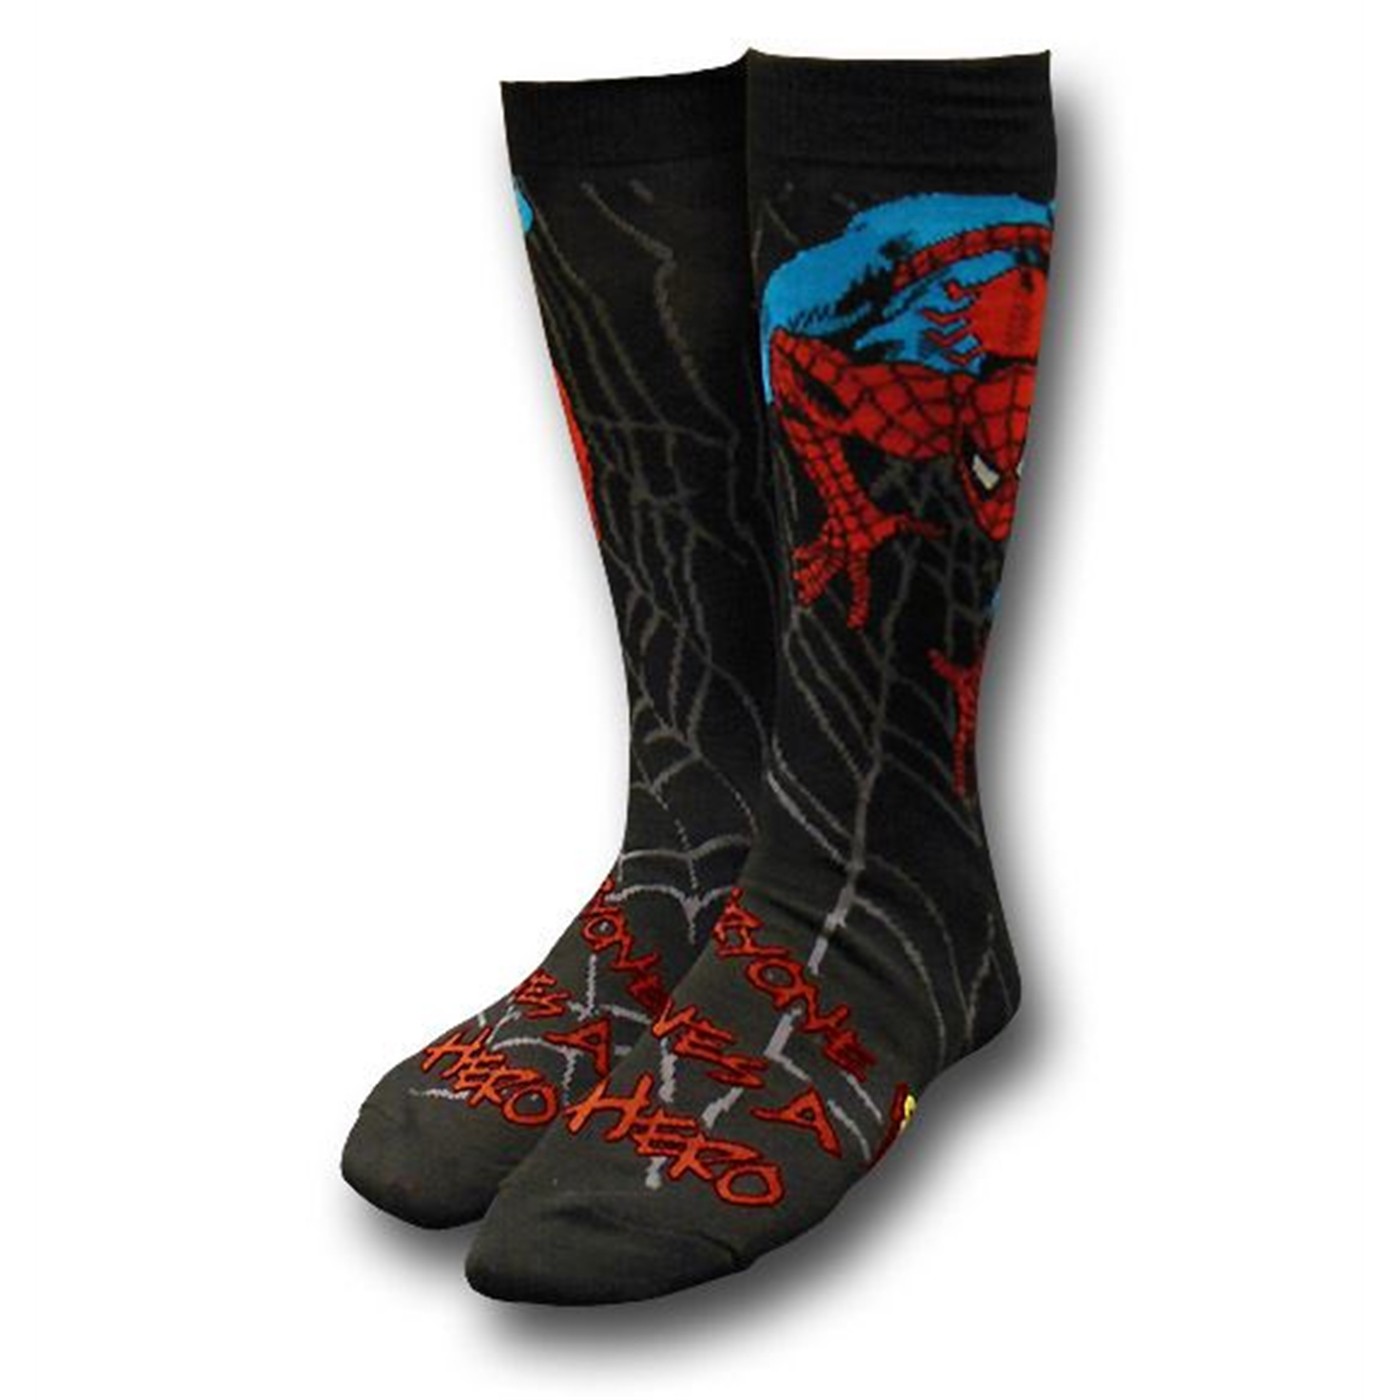 Spiderman Image and Grey Socks 2-Pack